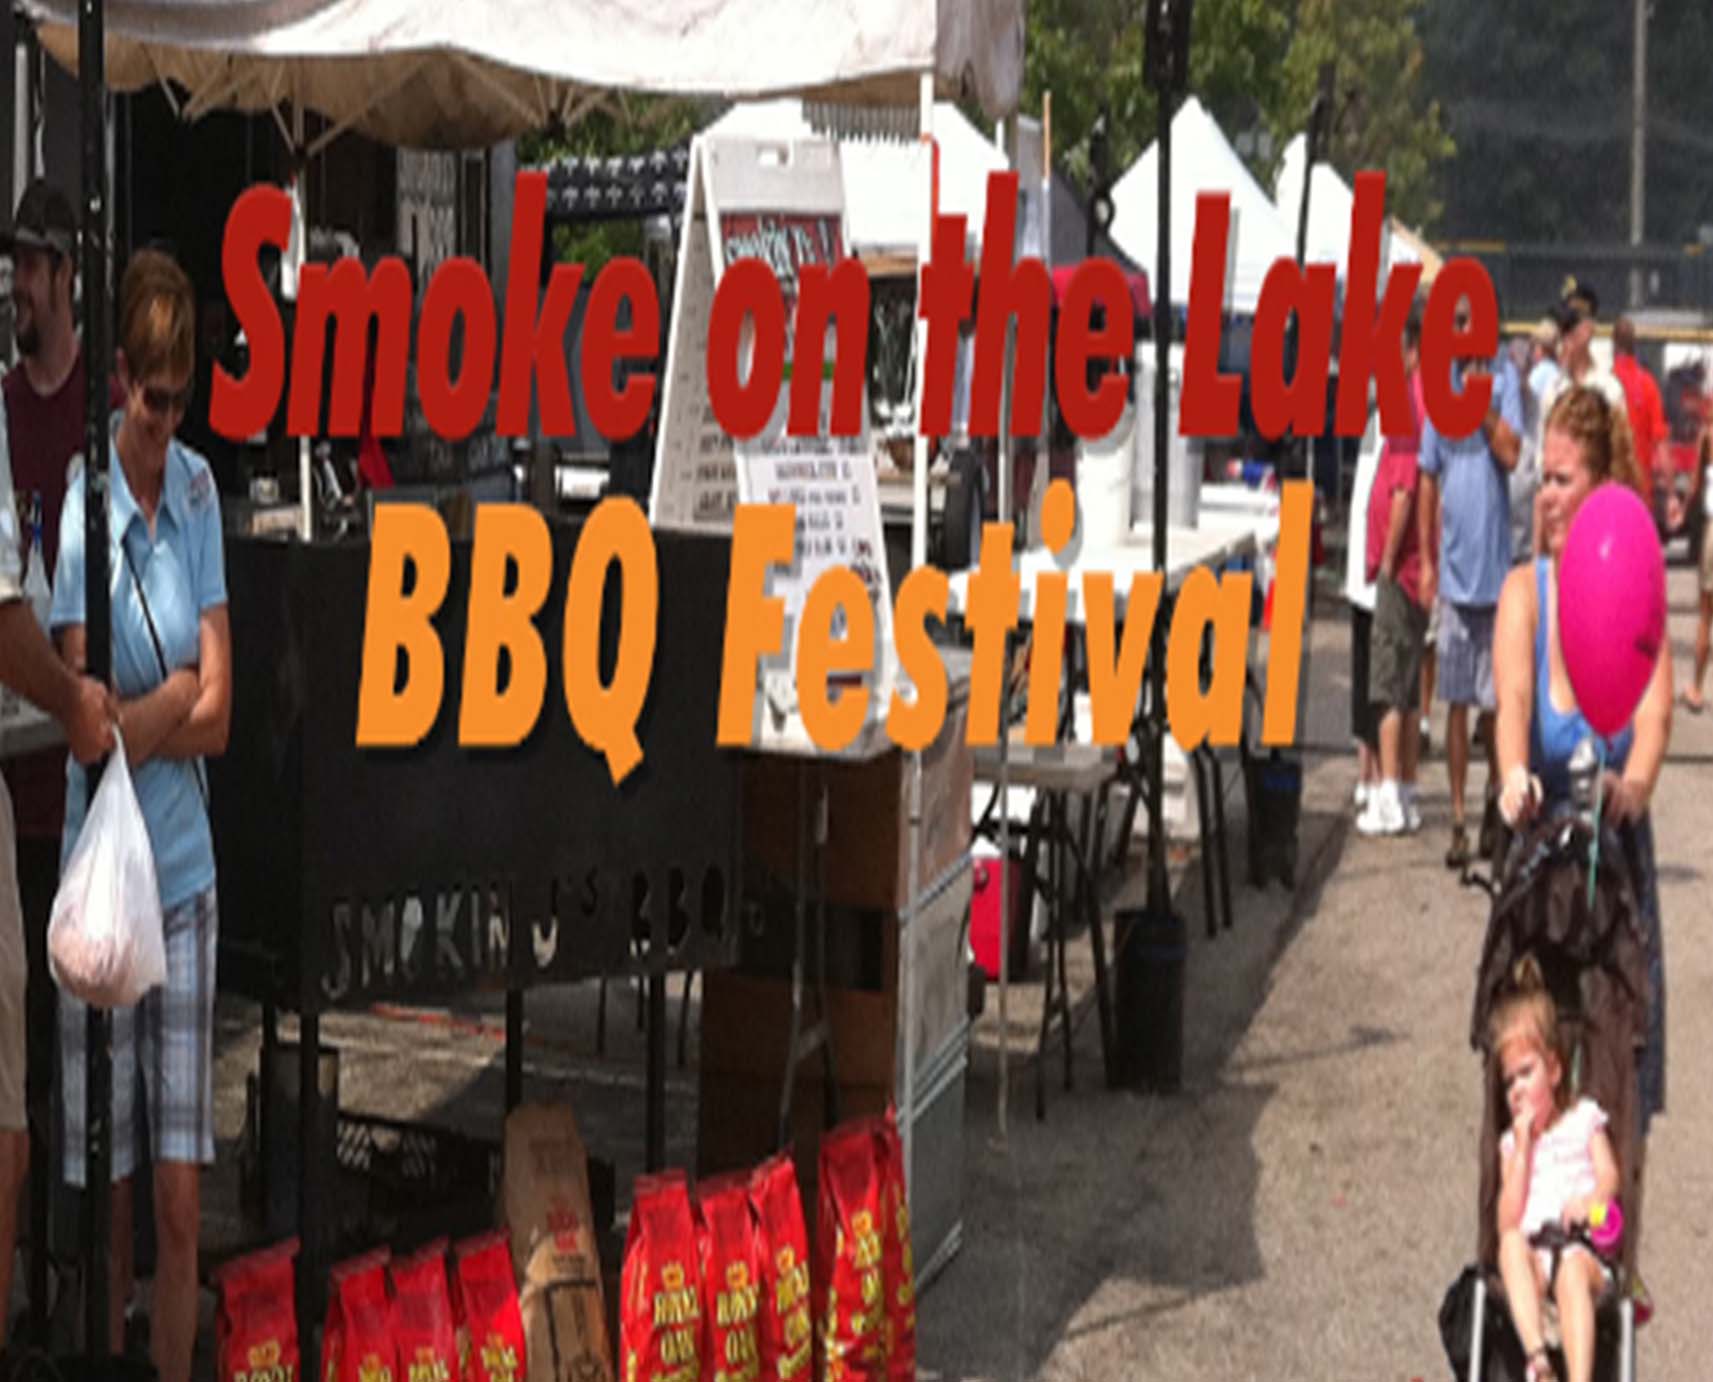 Holy Smokes BBQ Festival